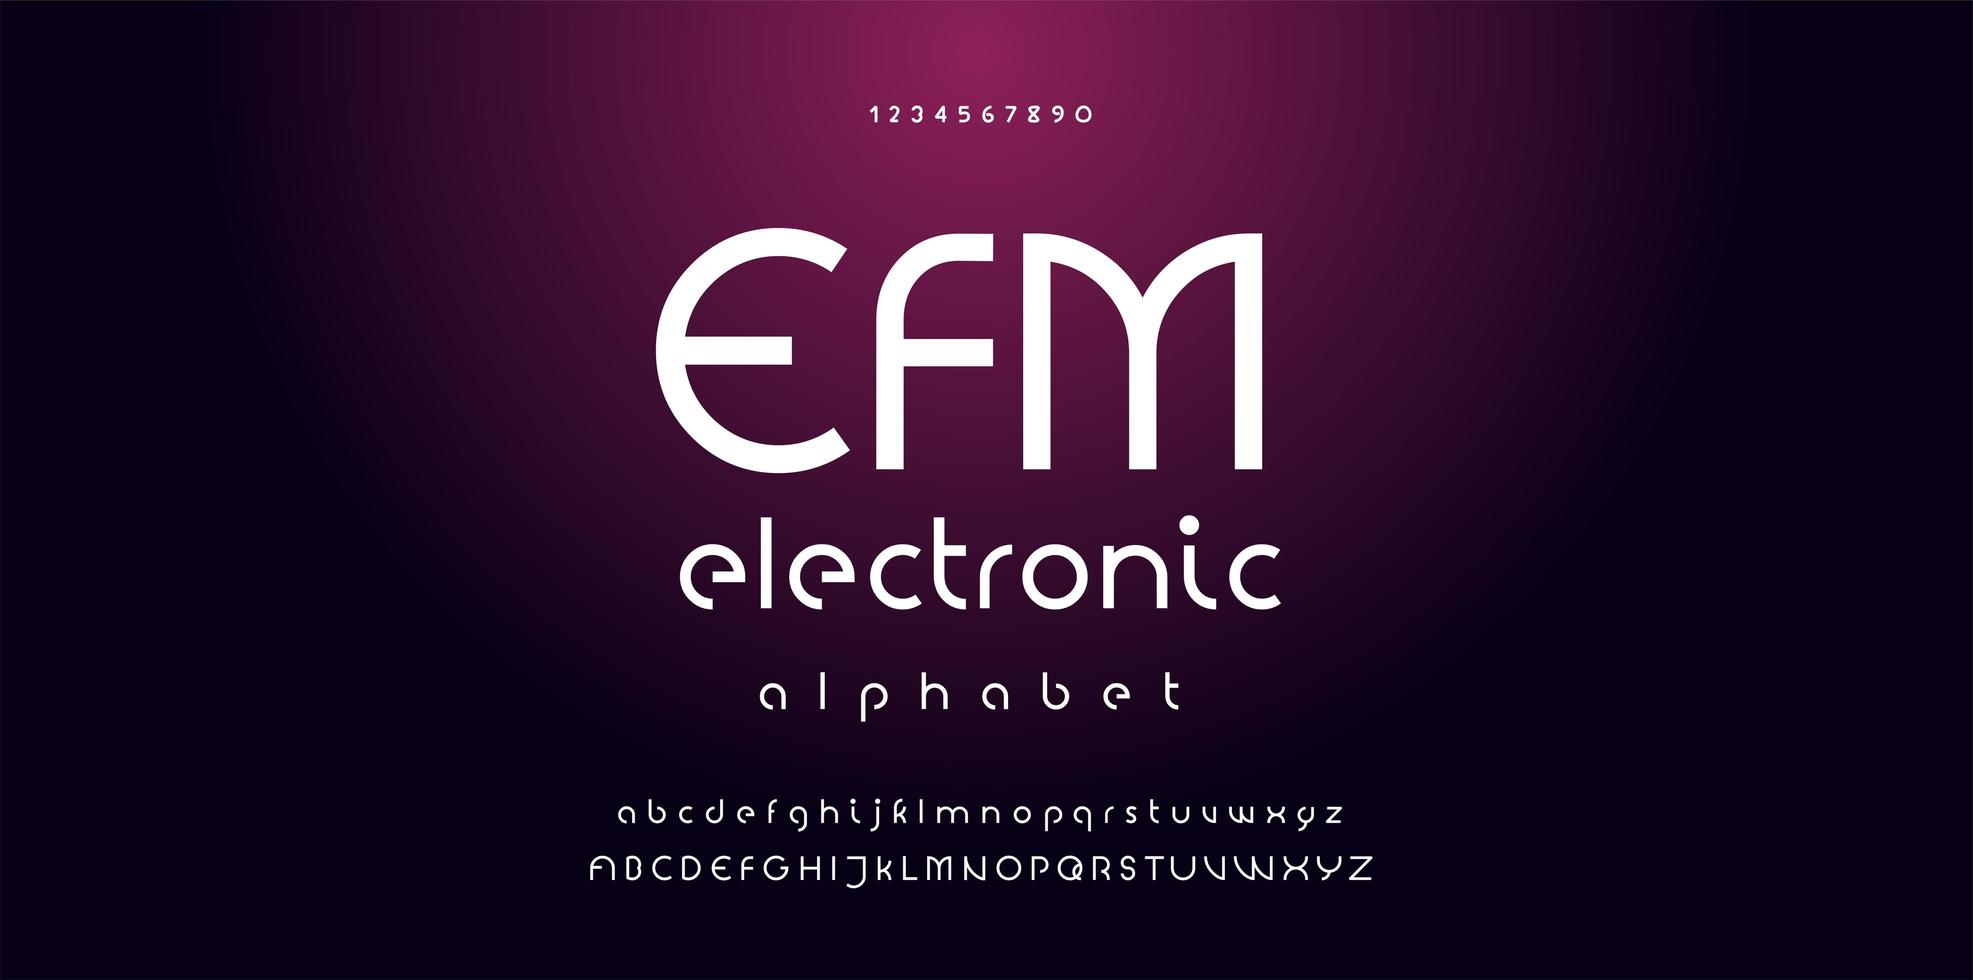 Electronic digital music font vector